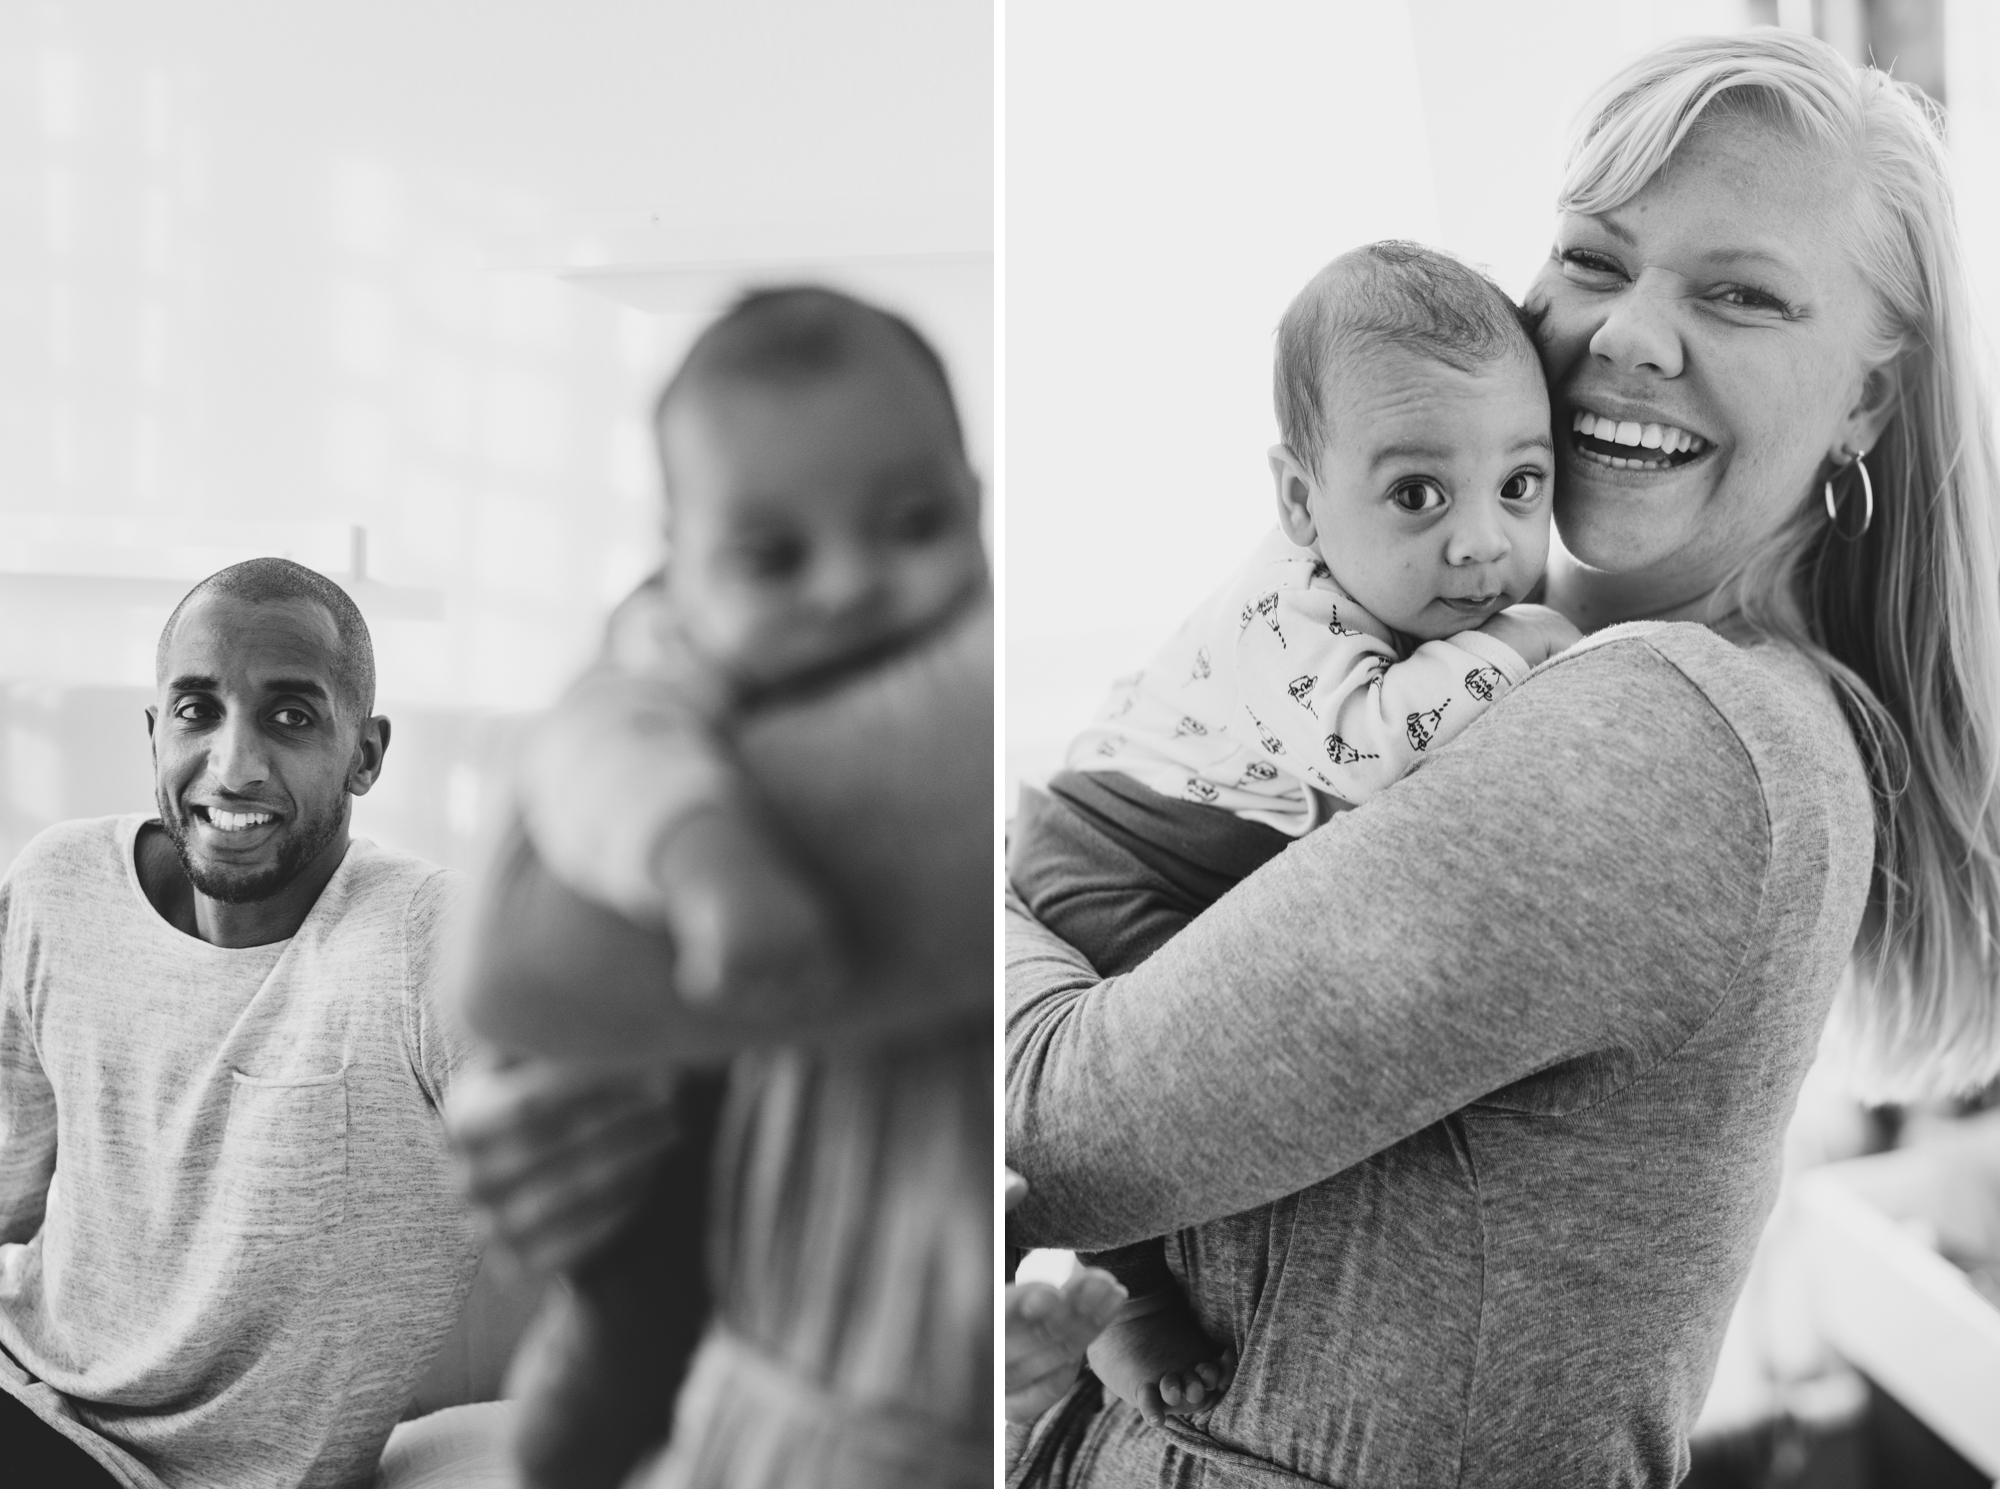 Bebisfotografering - Fotografering hemma hos en familj i Stockholm